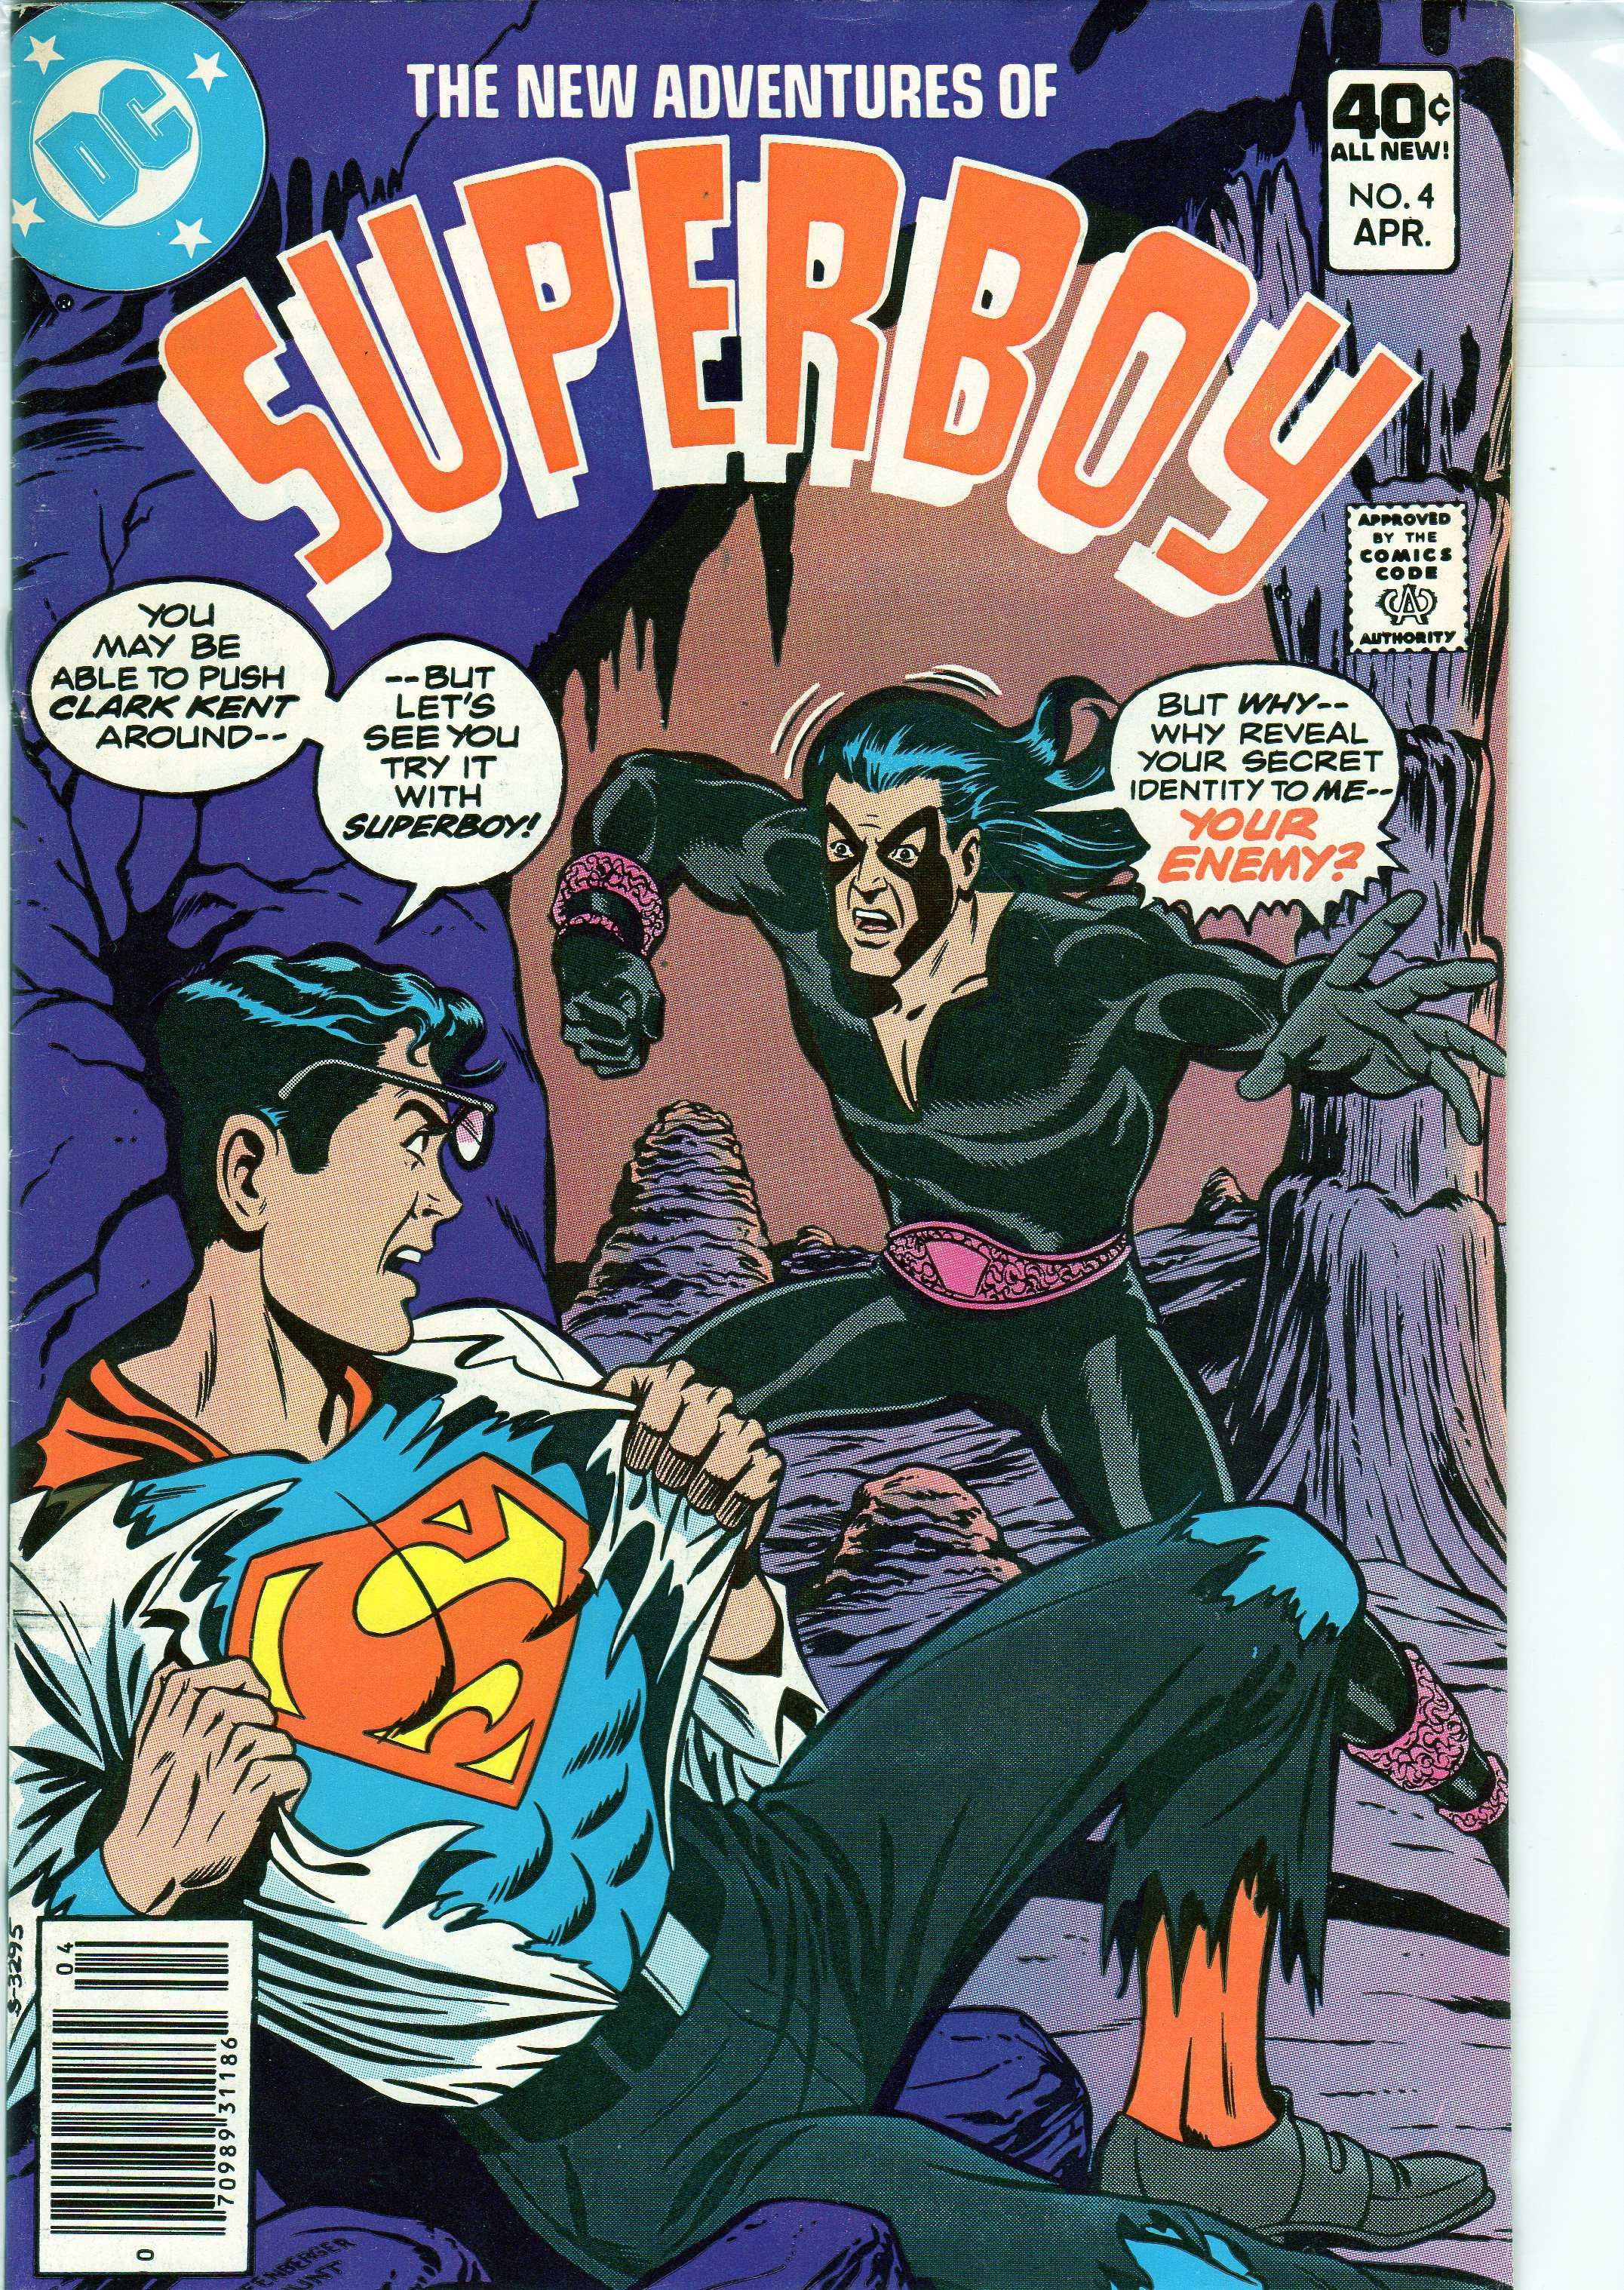 The New Adventures of Superboy #4 DC Comics 1980 - benzi desenate